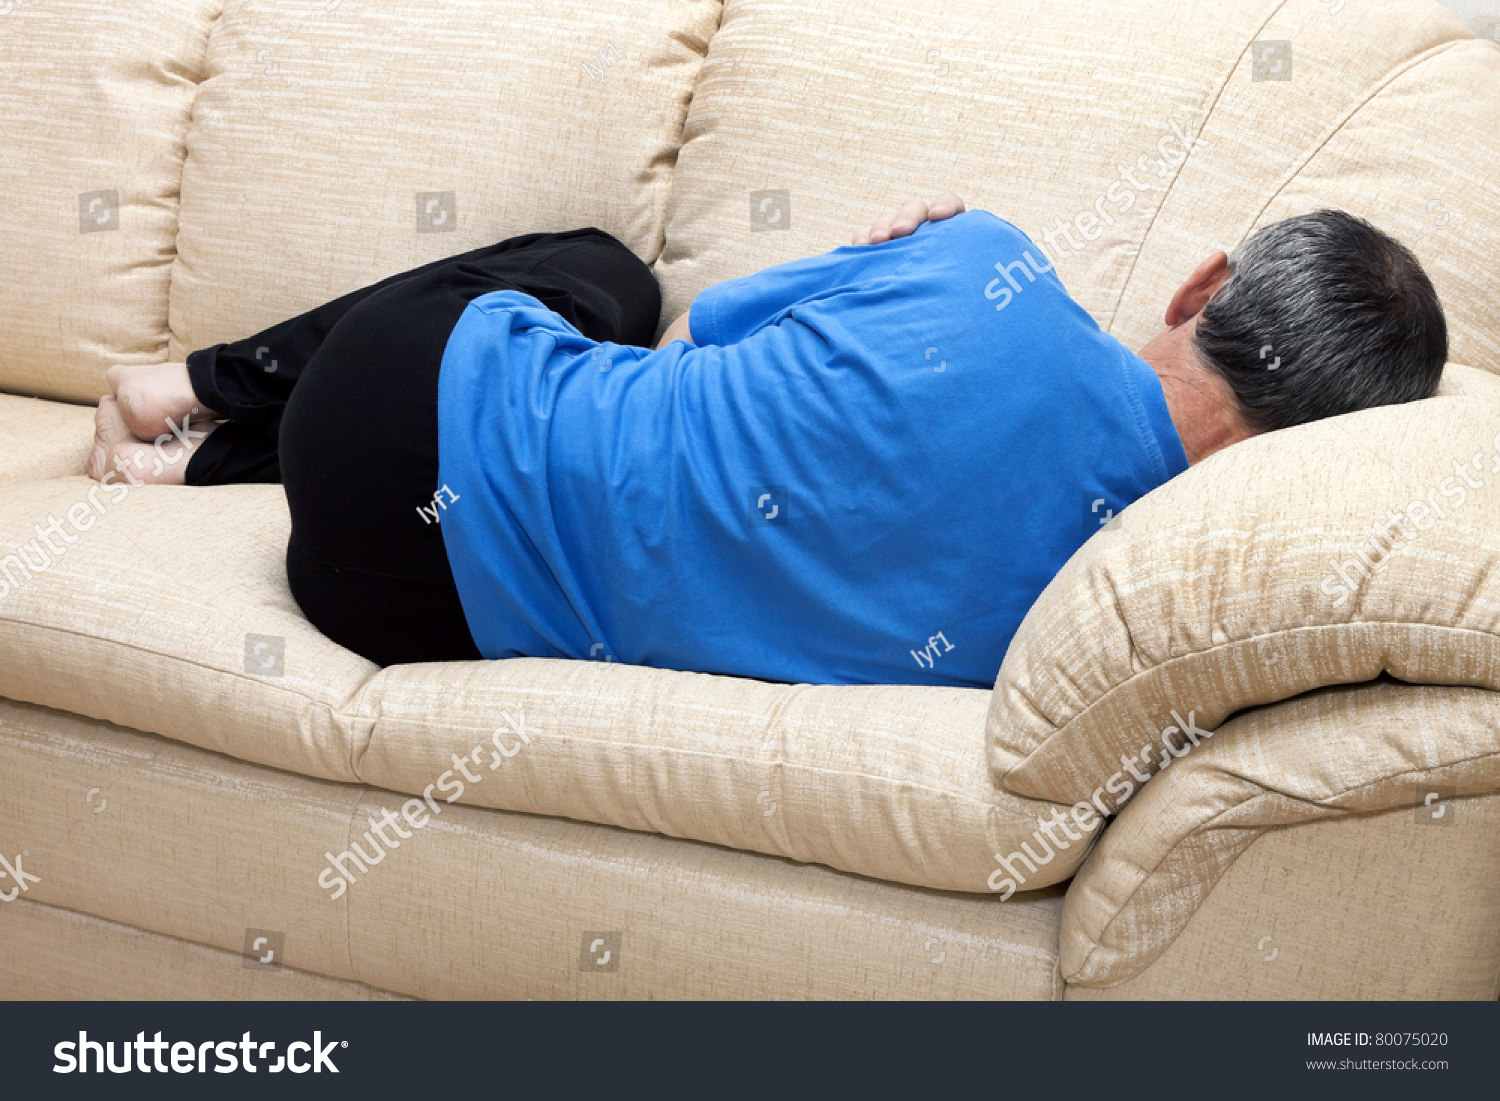 Сплю на спине нога на ногу. Спящий человек на диване. Человек лежит на спине.